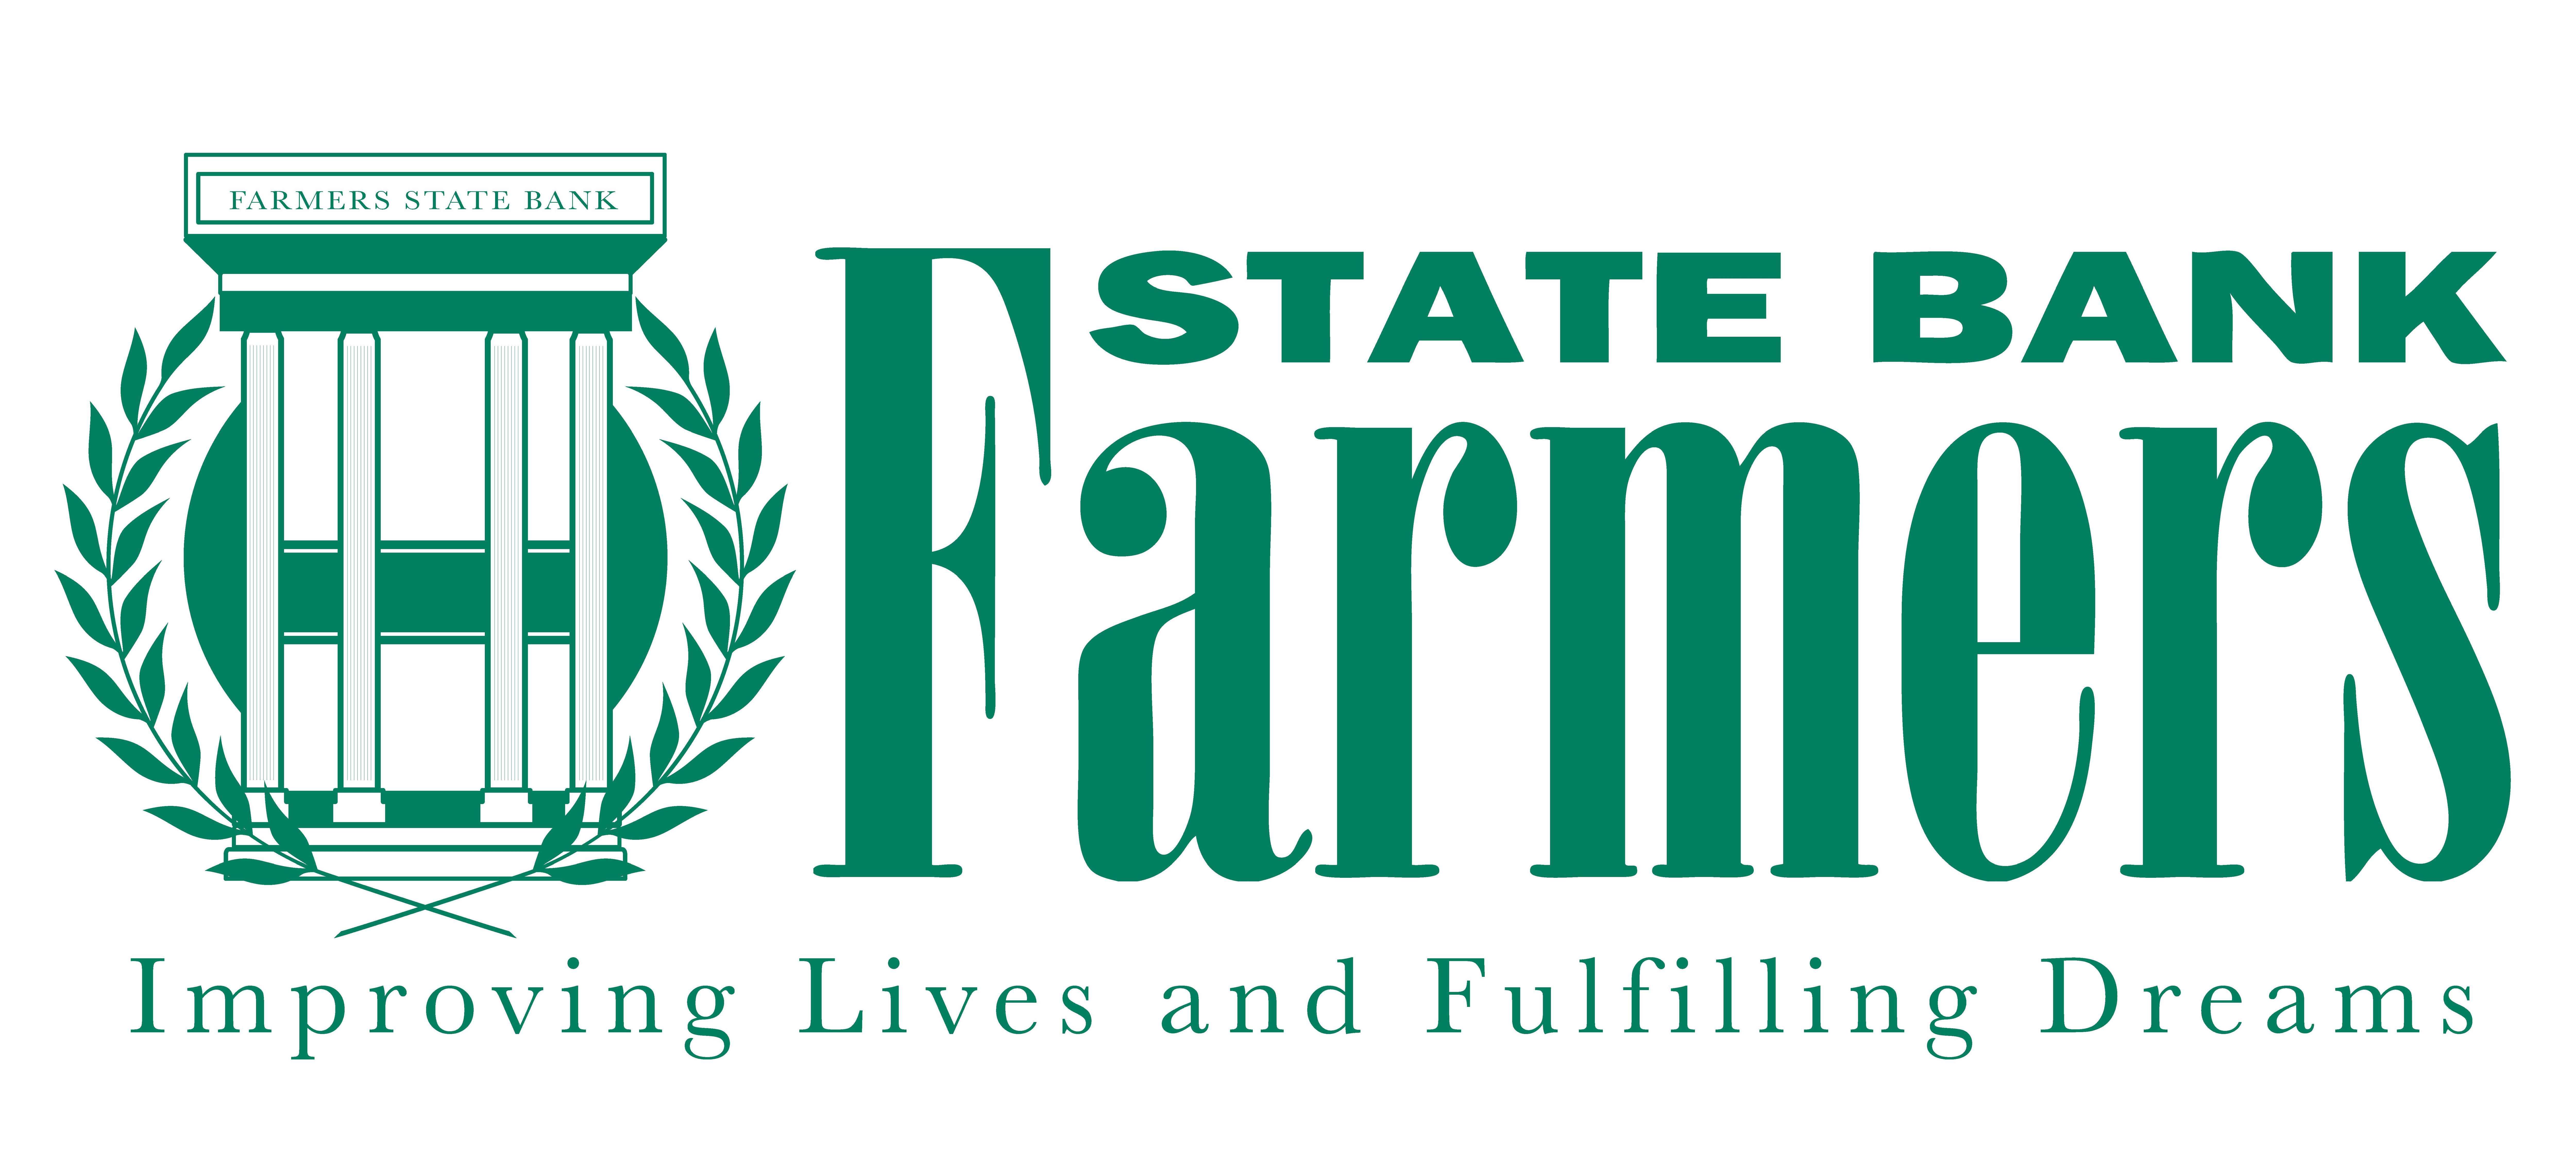 Farmers State Bank Green (002).jpg logo